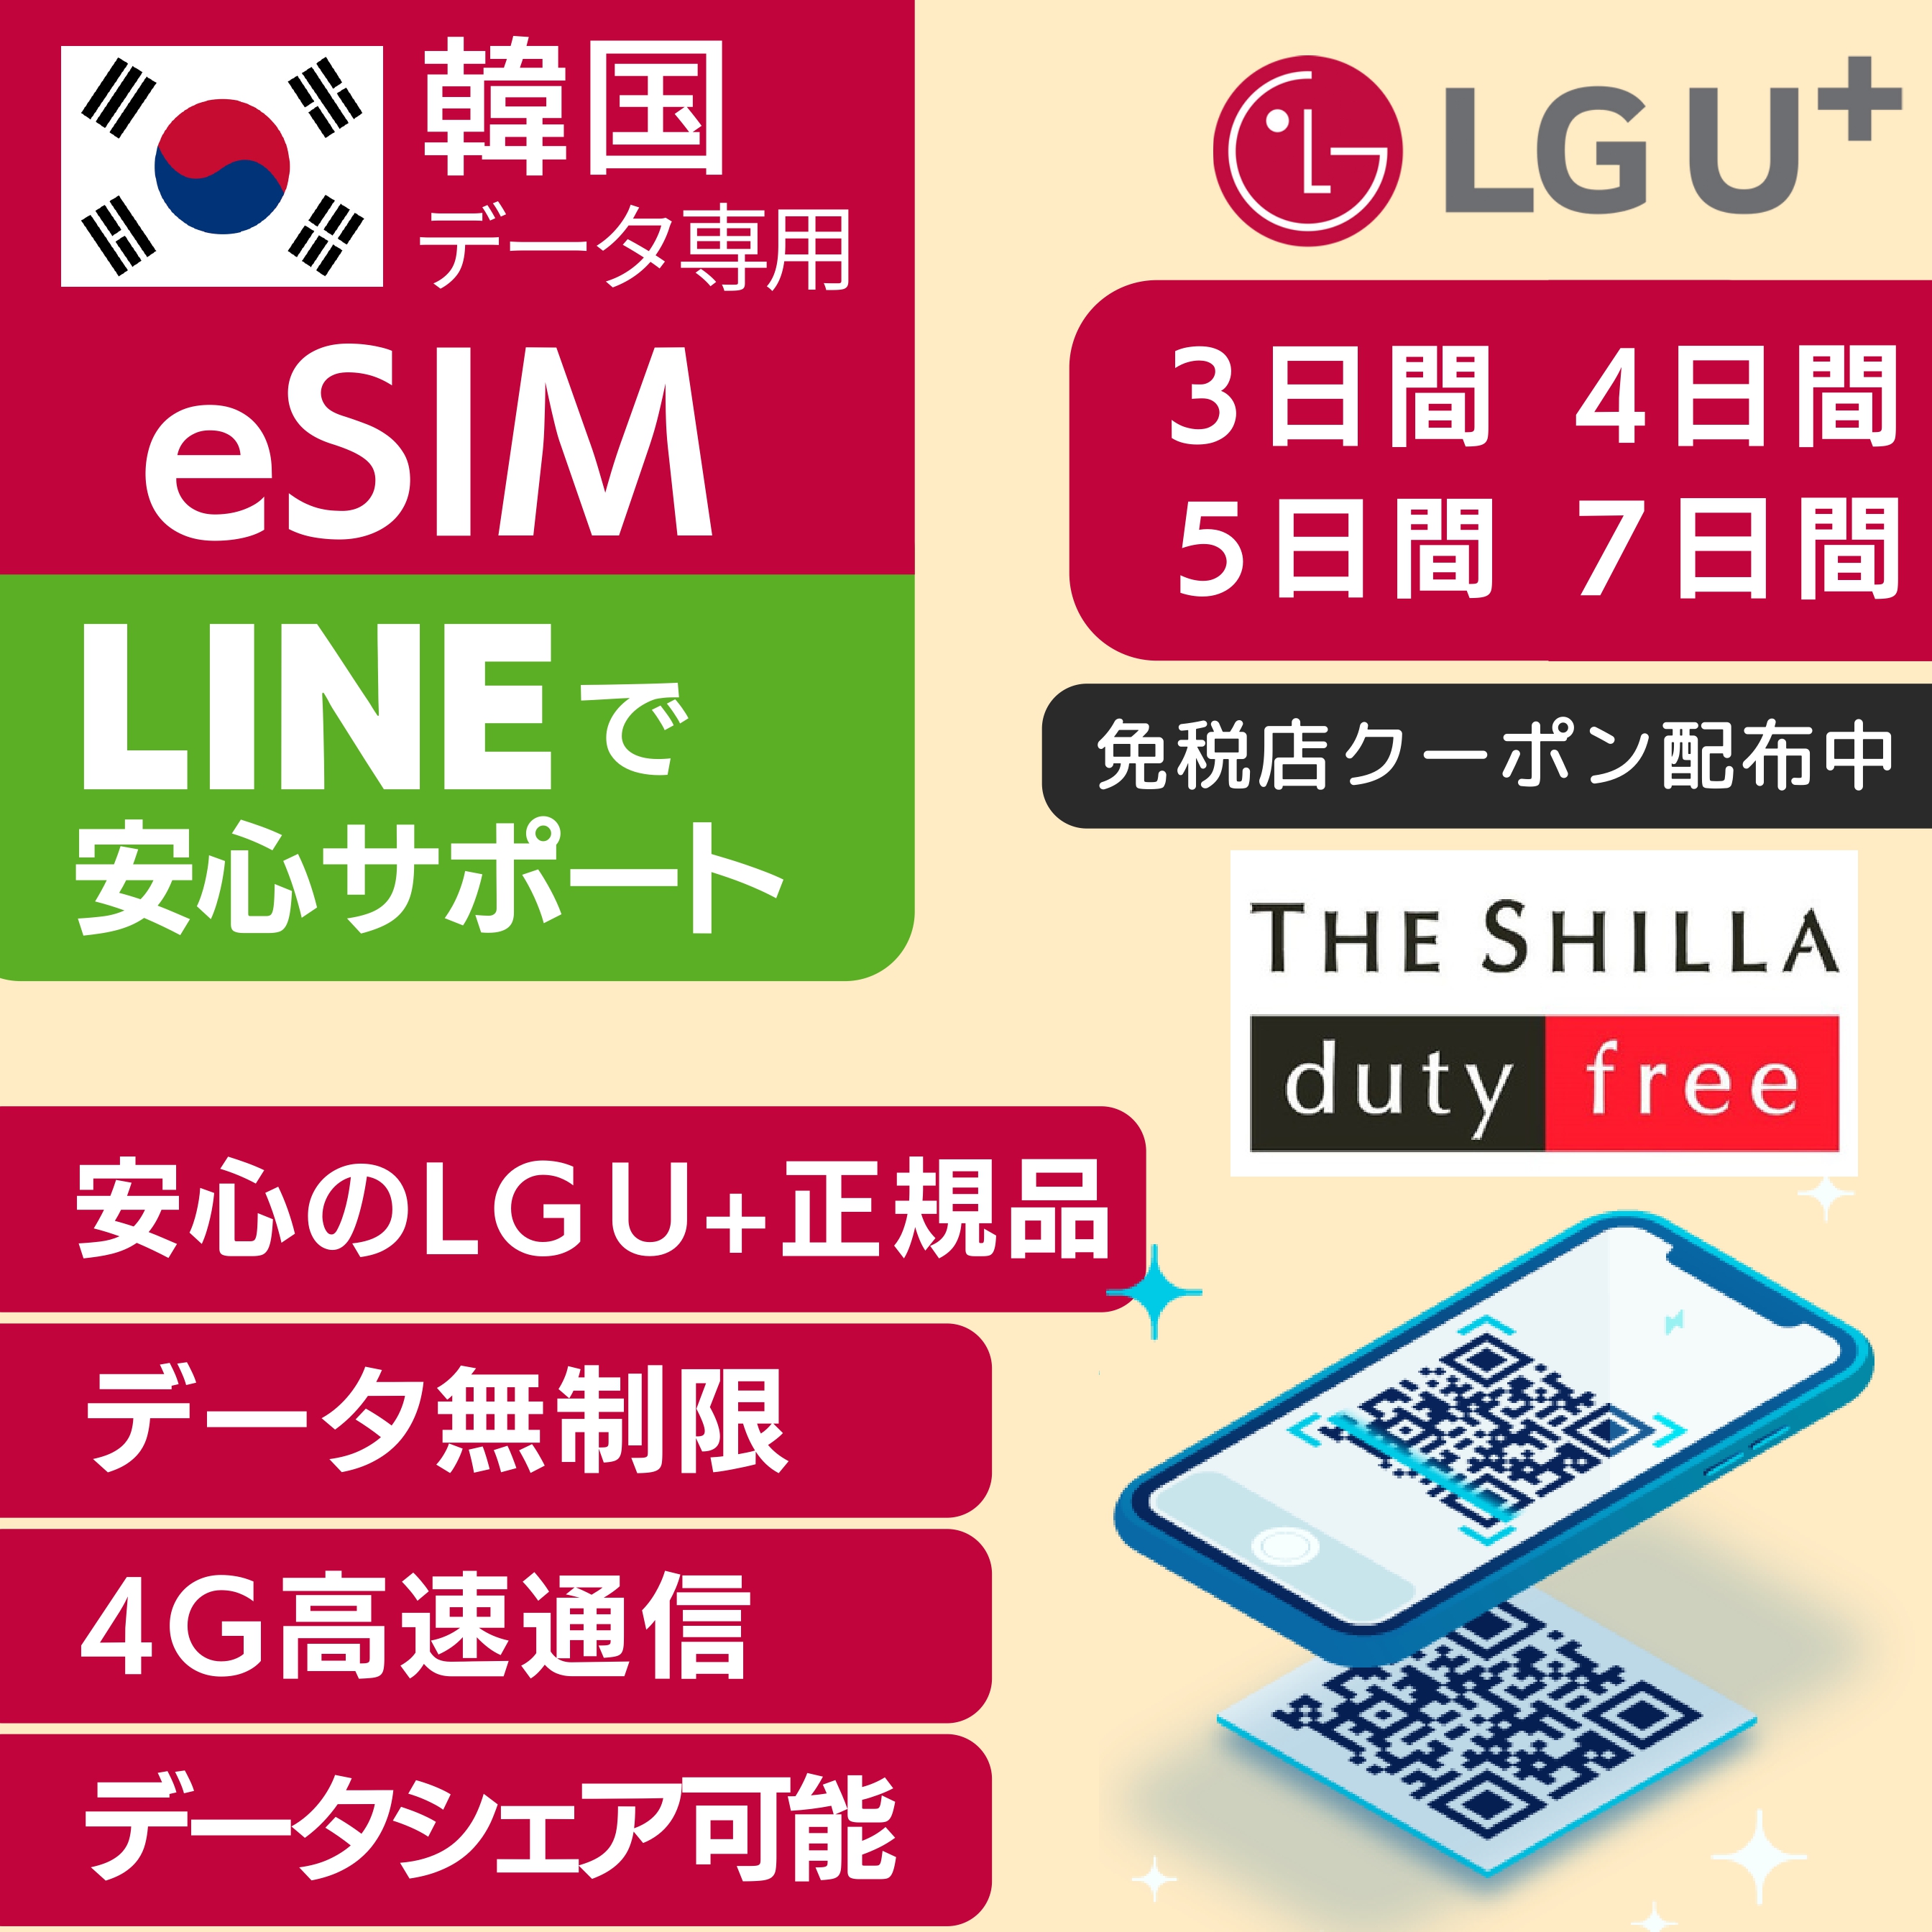 韓国 eSIM 3日間 4日間 5日間 7日間 10日間 LG U  正規品 プリペイドSIM e-SIM 韓国旅行 高速 4G LTE データ無制限 土日可 LG UPLUS インターネット